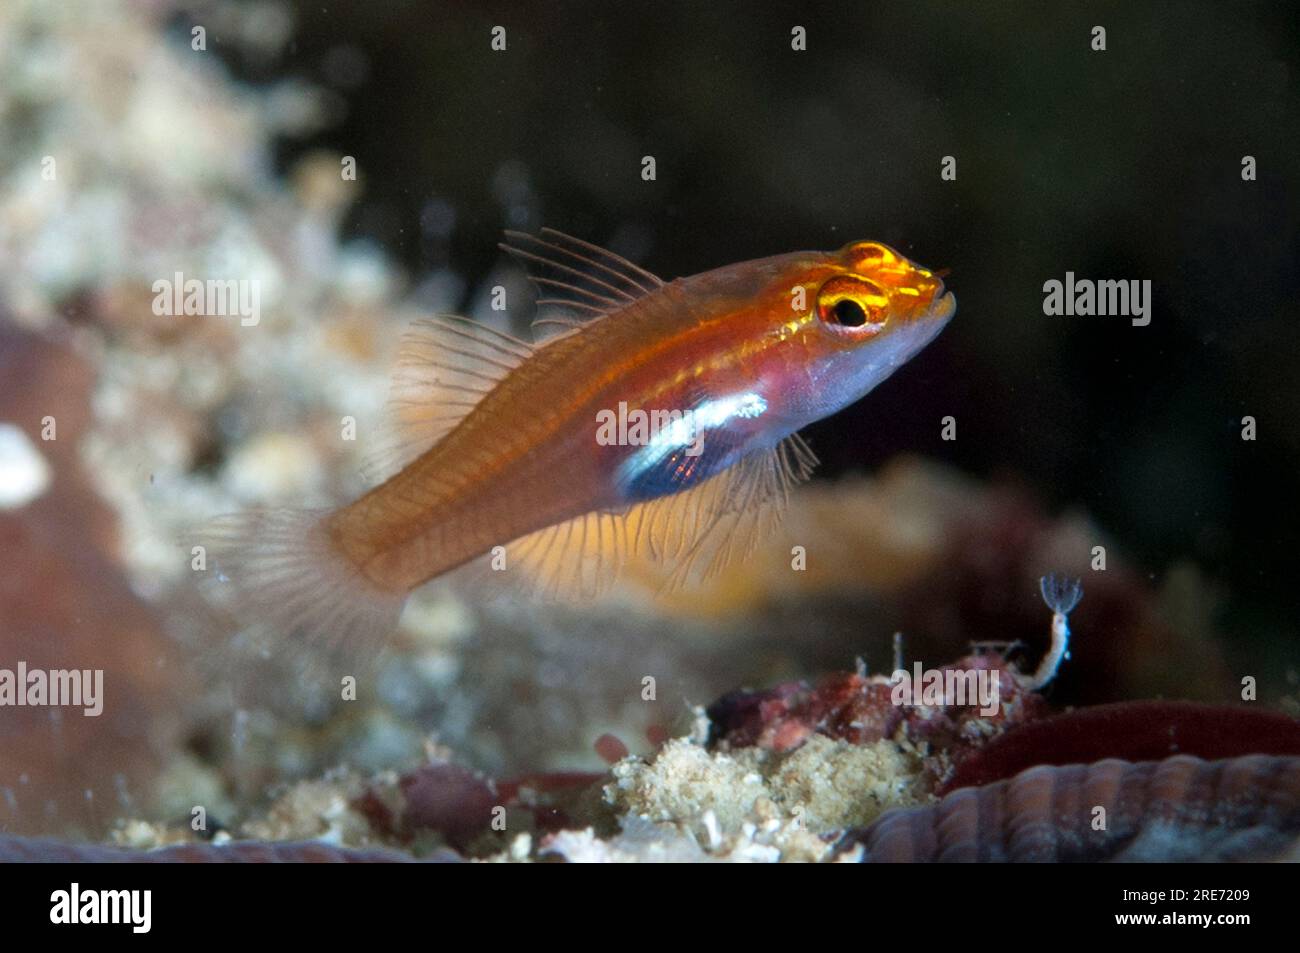 Neon Pygmygoby, Eviota pellucida, Neptune's Sea Fan dive site, Wayilbatan, Raja Ampat, West Papua, Indonesia Stock Photo